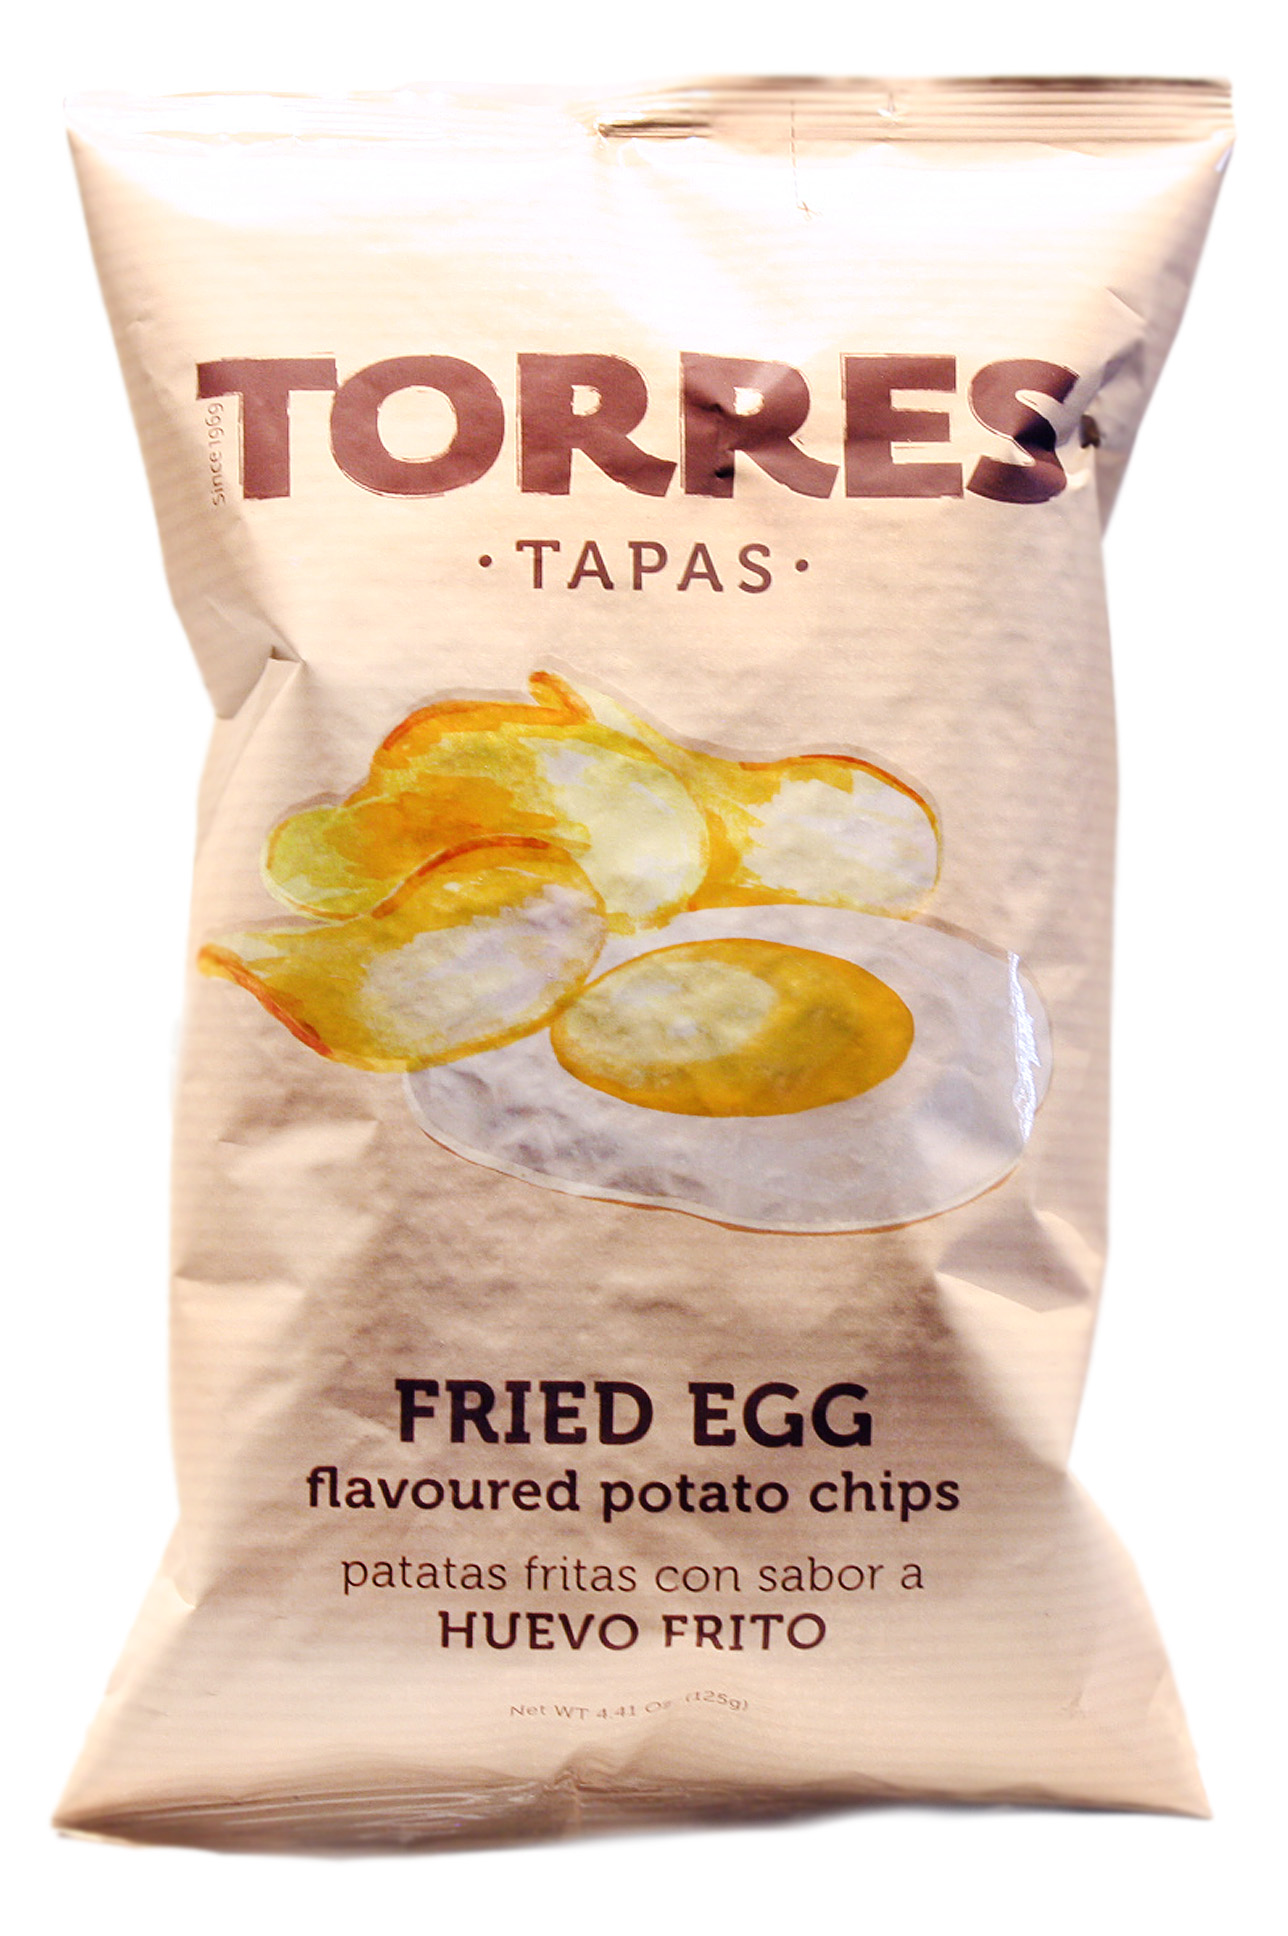 Fried egg flavoured potato chip